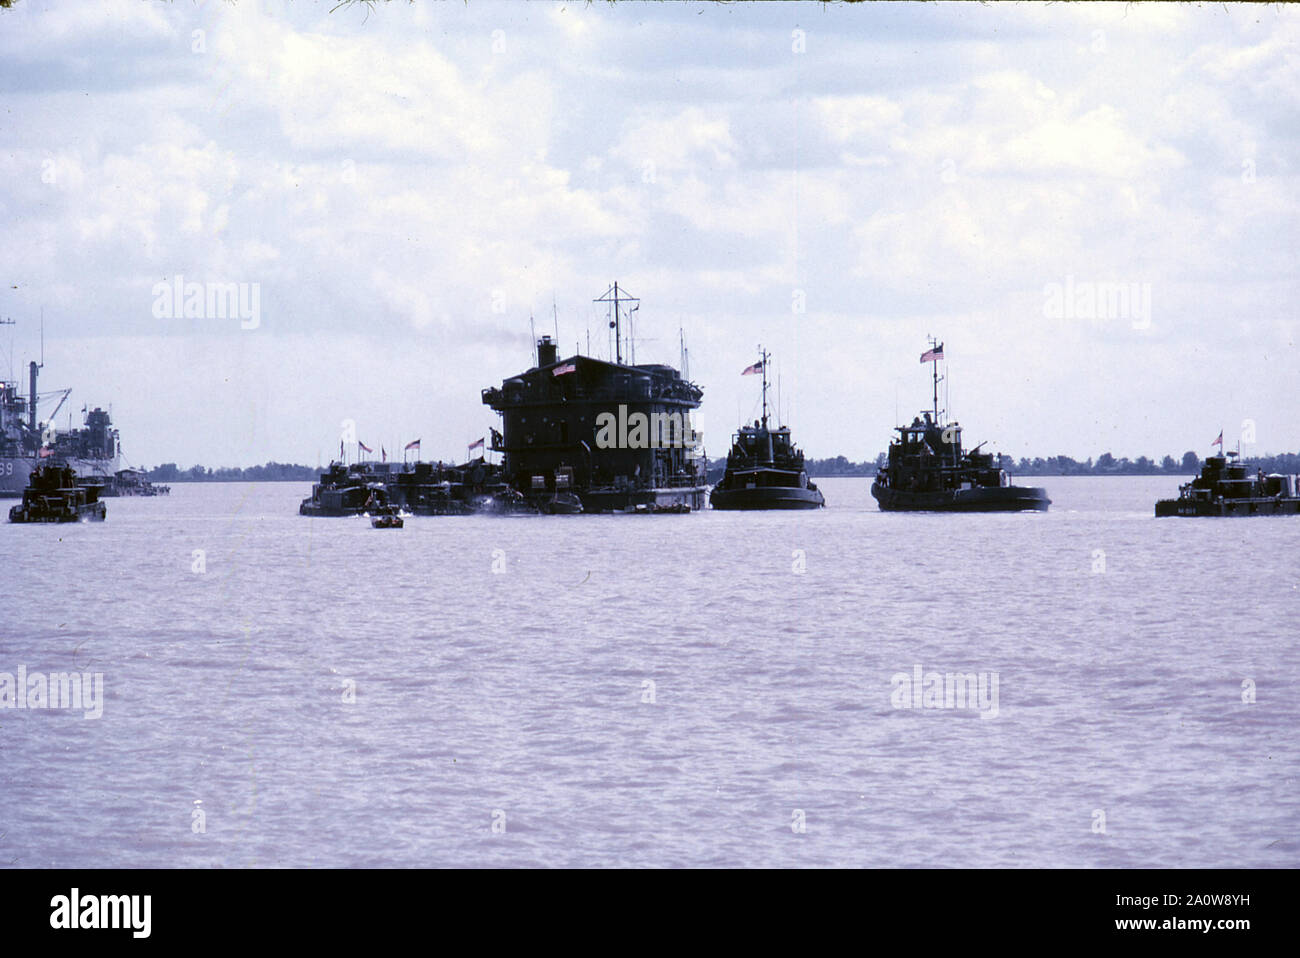 USA Vietnam-Krieg / Guerra de Vietnam - ATC / transportes de tropas blindados Tango-Boat Foto de stock